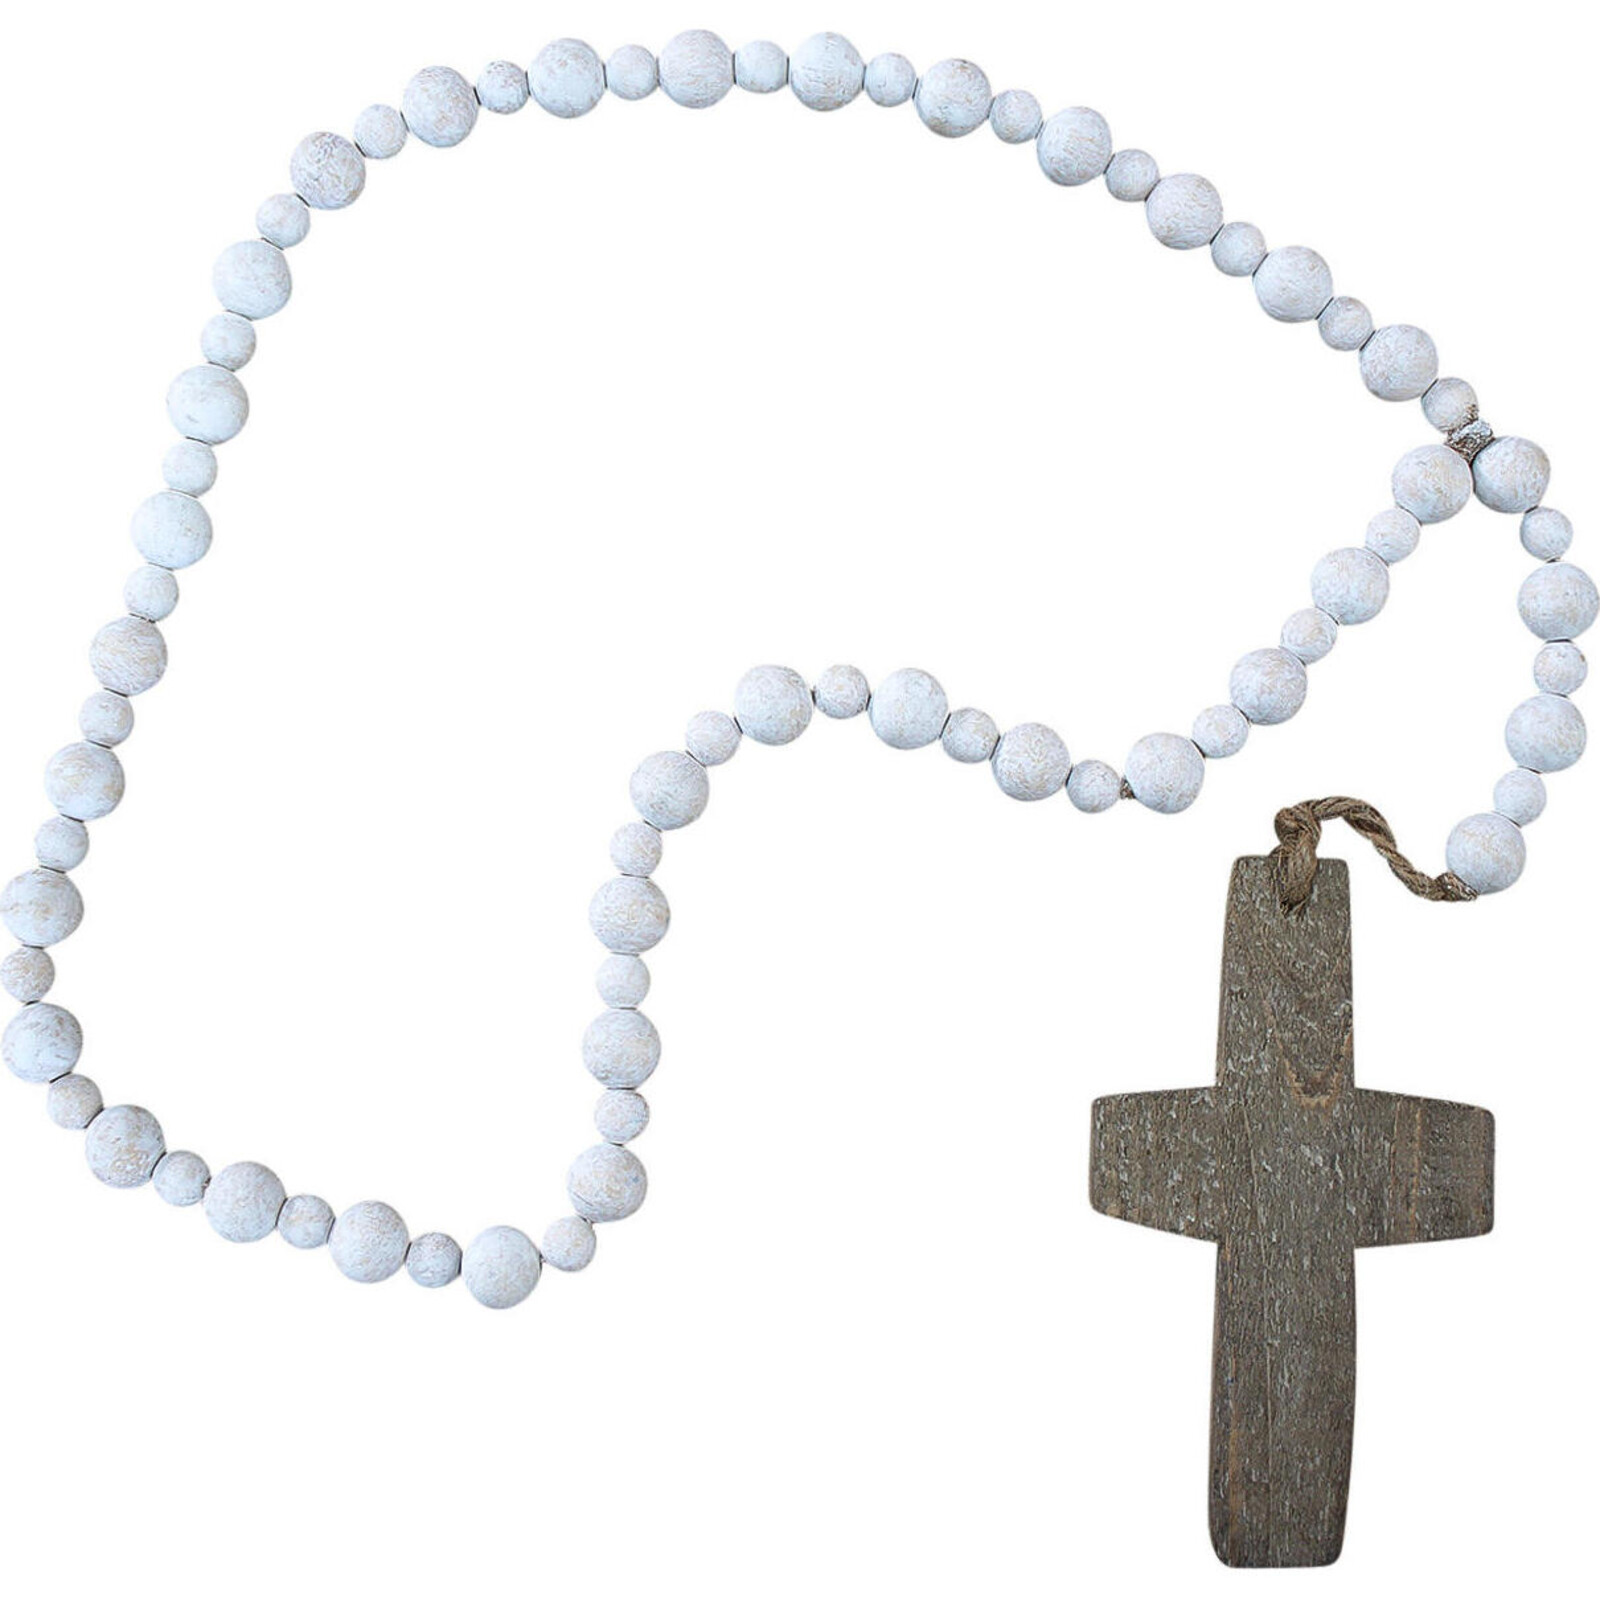 Beads cross